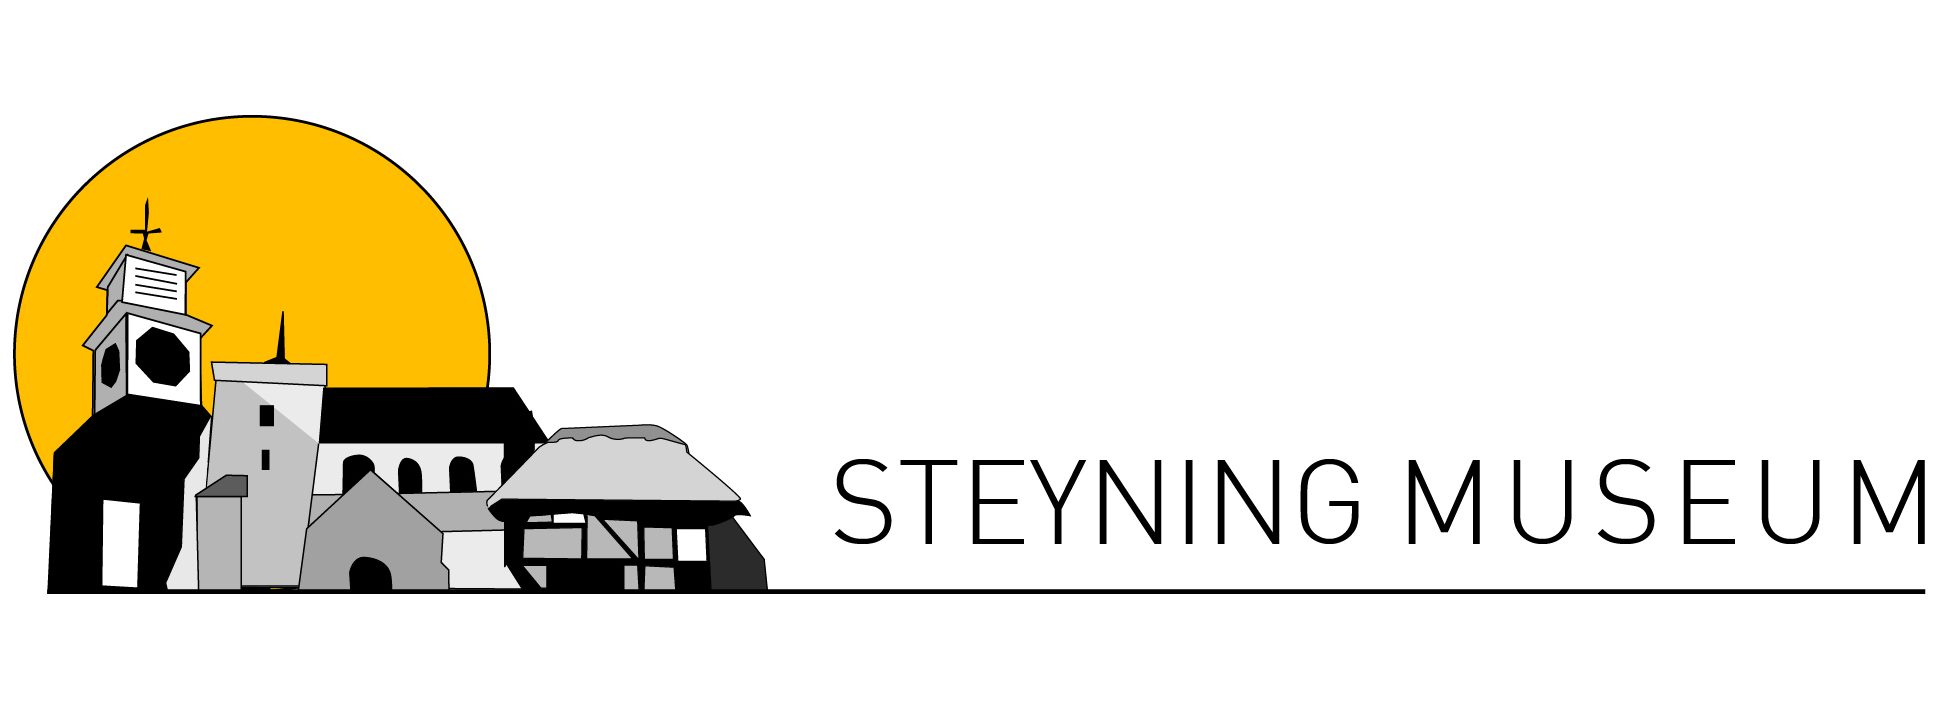 Steyning Museum logo